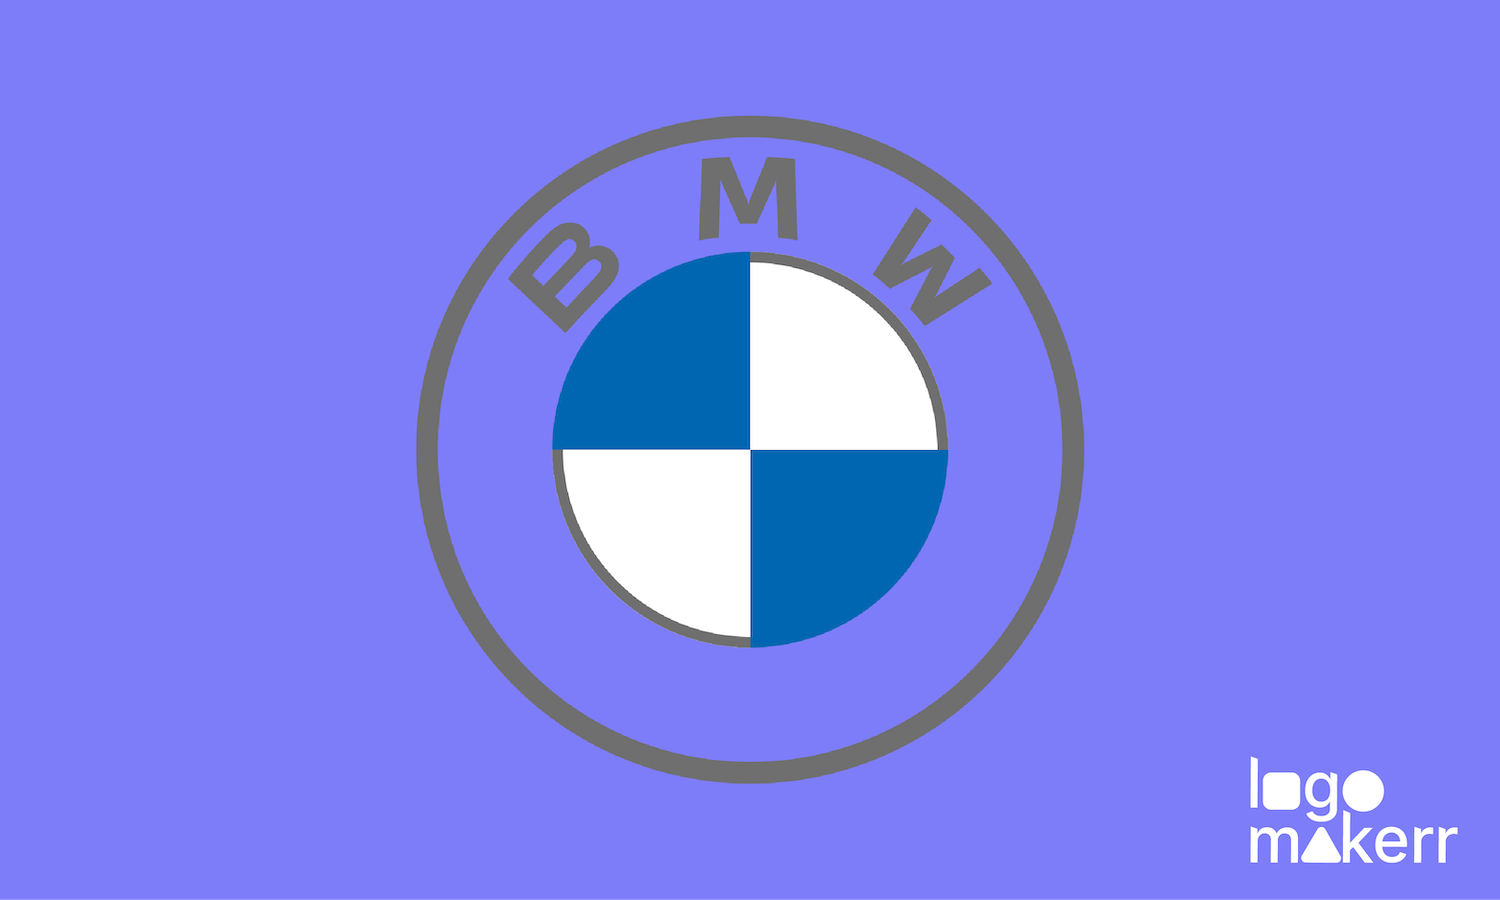 BMW logo on a purple background